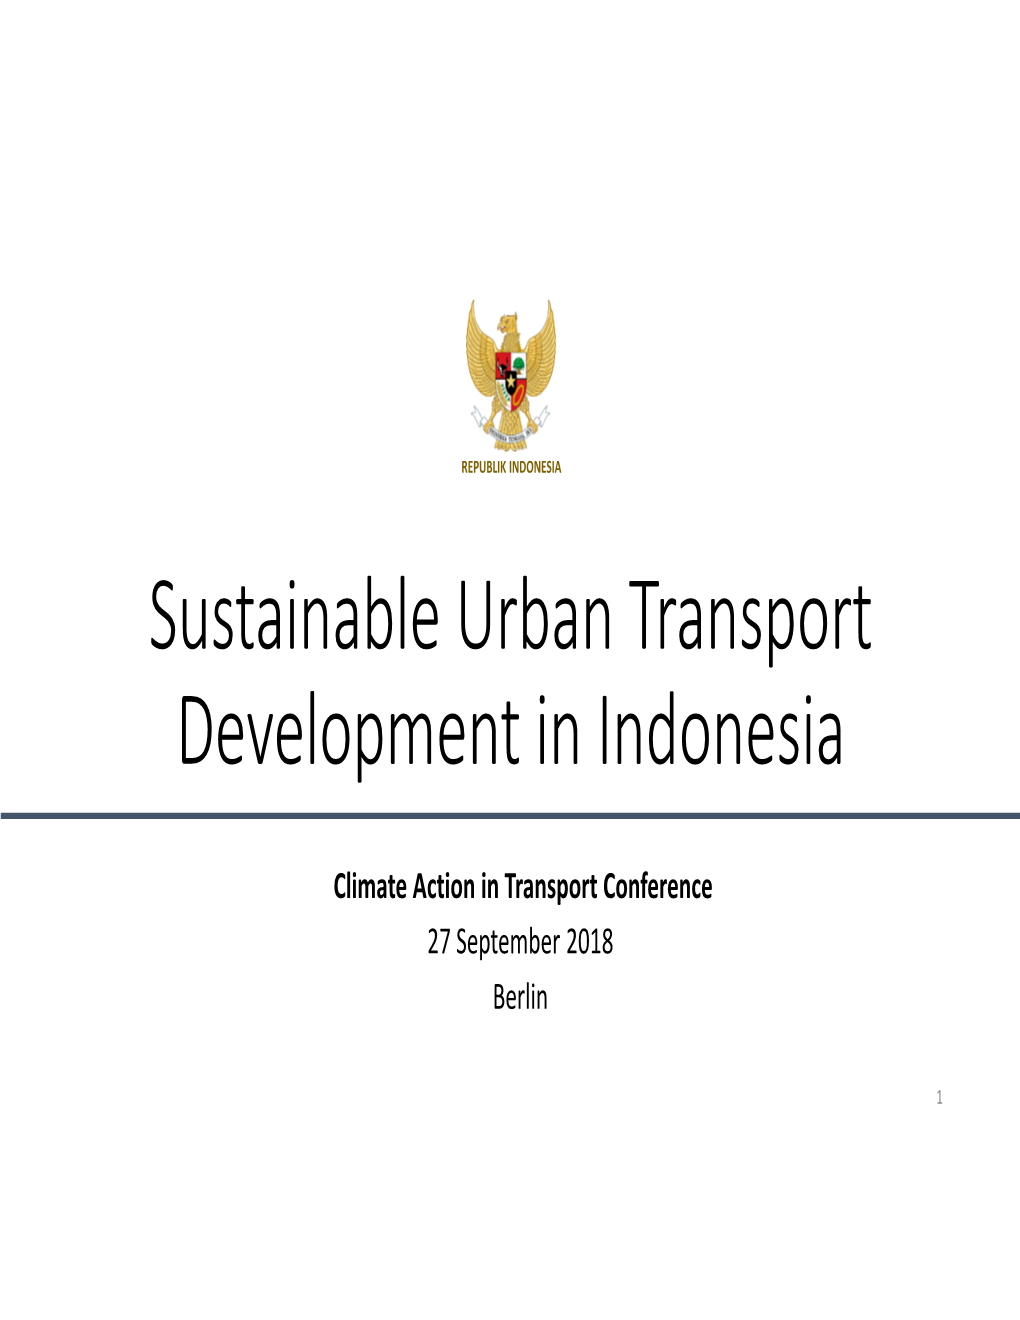 Sustainable Urban Transport Development in Indonesia